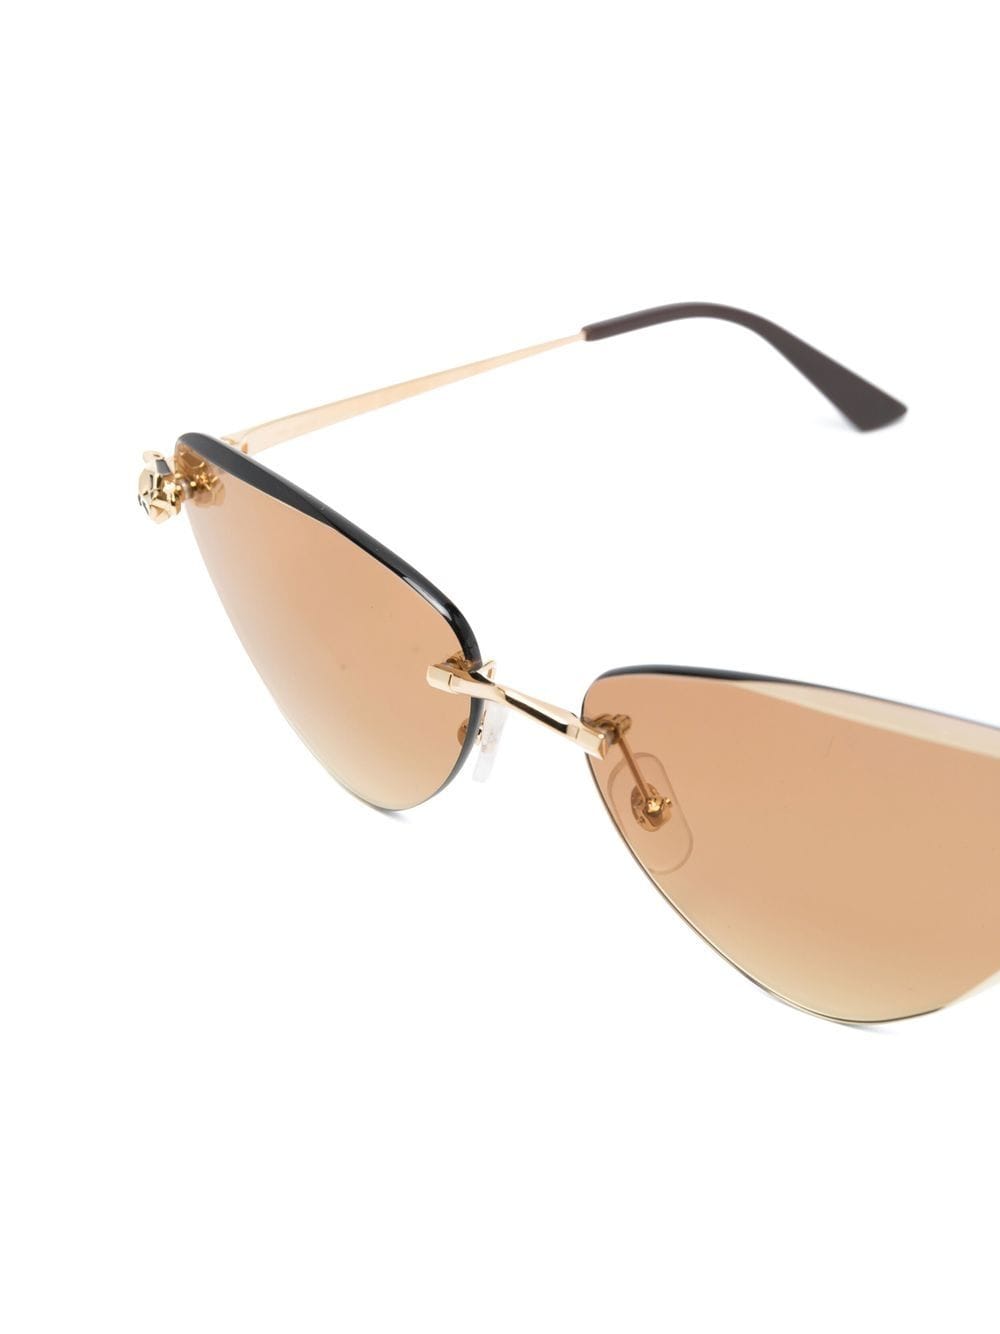 Louis Vuitton Desmayo Sunglasses